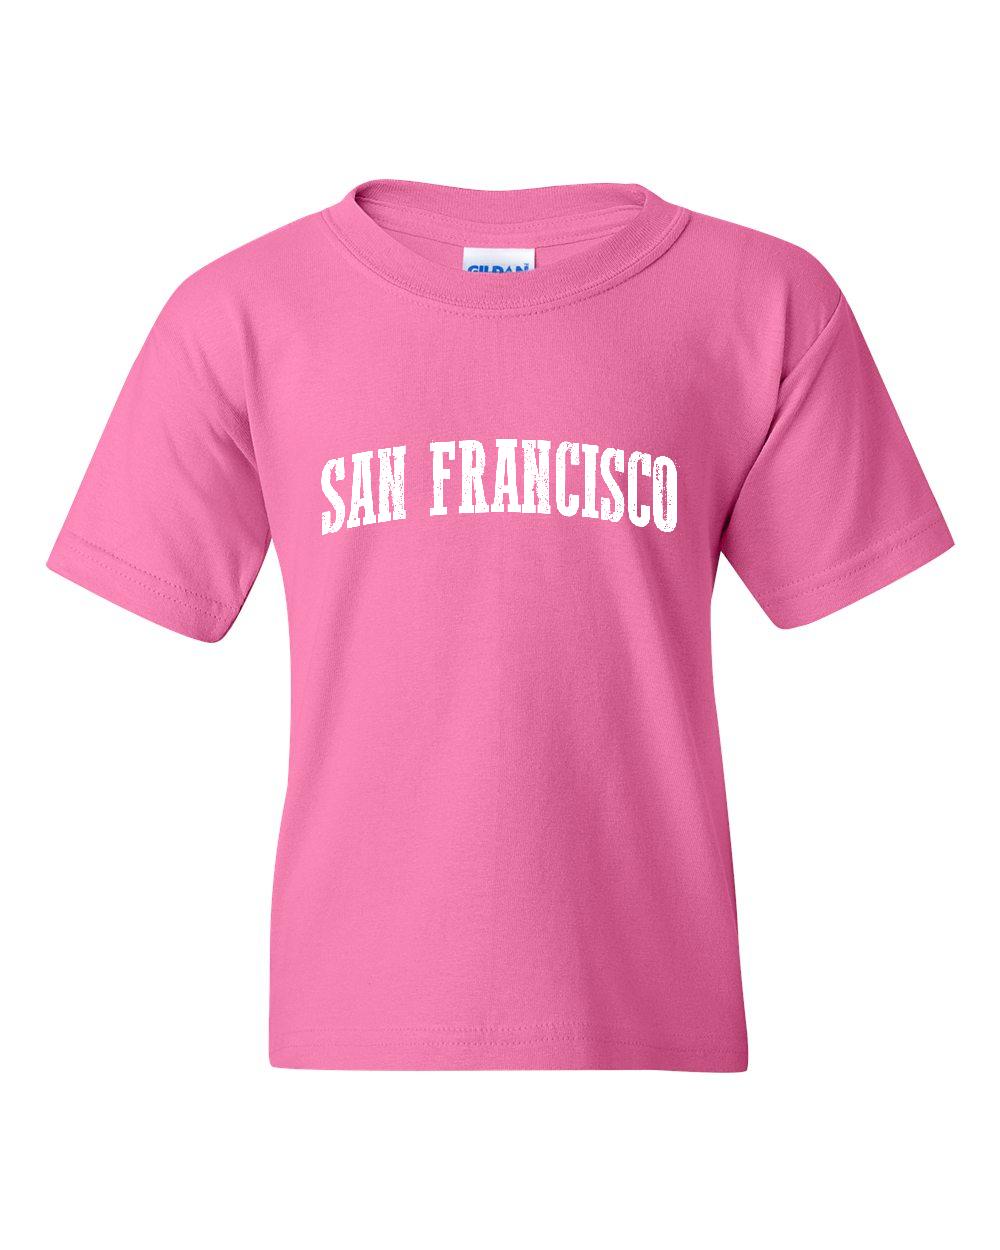 NIB - Big Girls T-Shirts and Tank Tops, up to Big Girls Size 24 - San Francisco - image 1 of 5